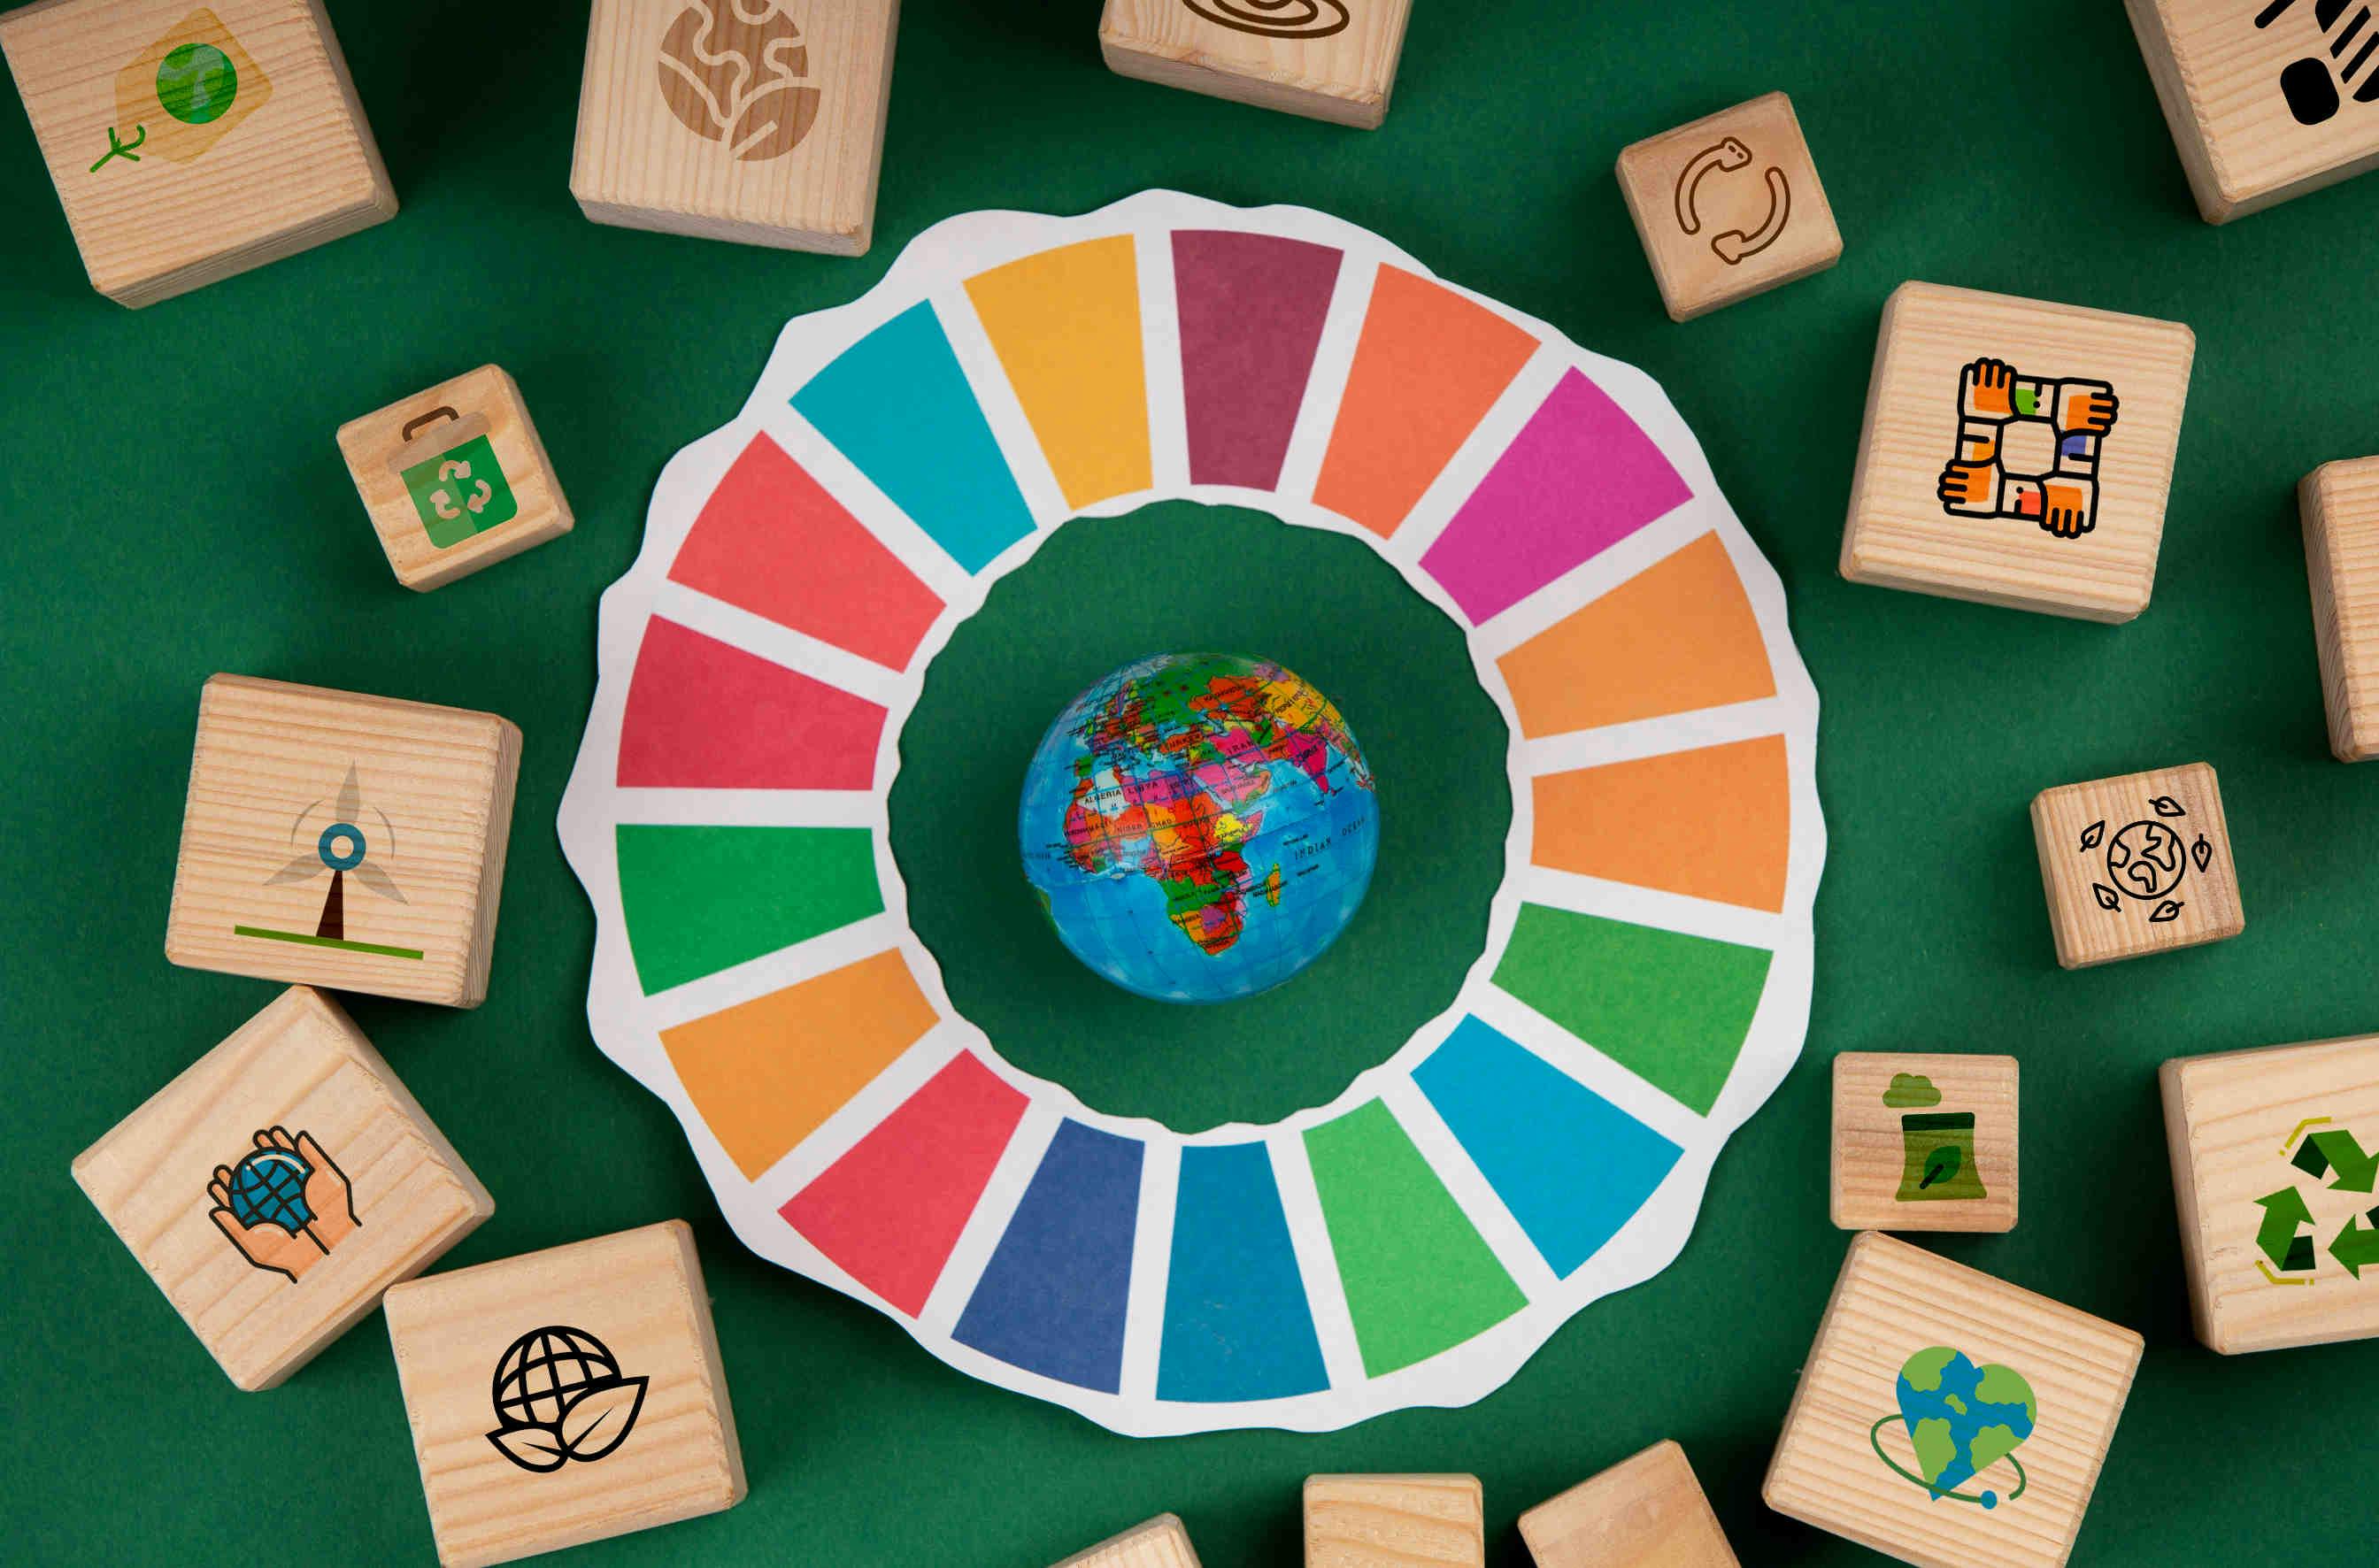 2030 Agenda: Sustainable Development Goals